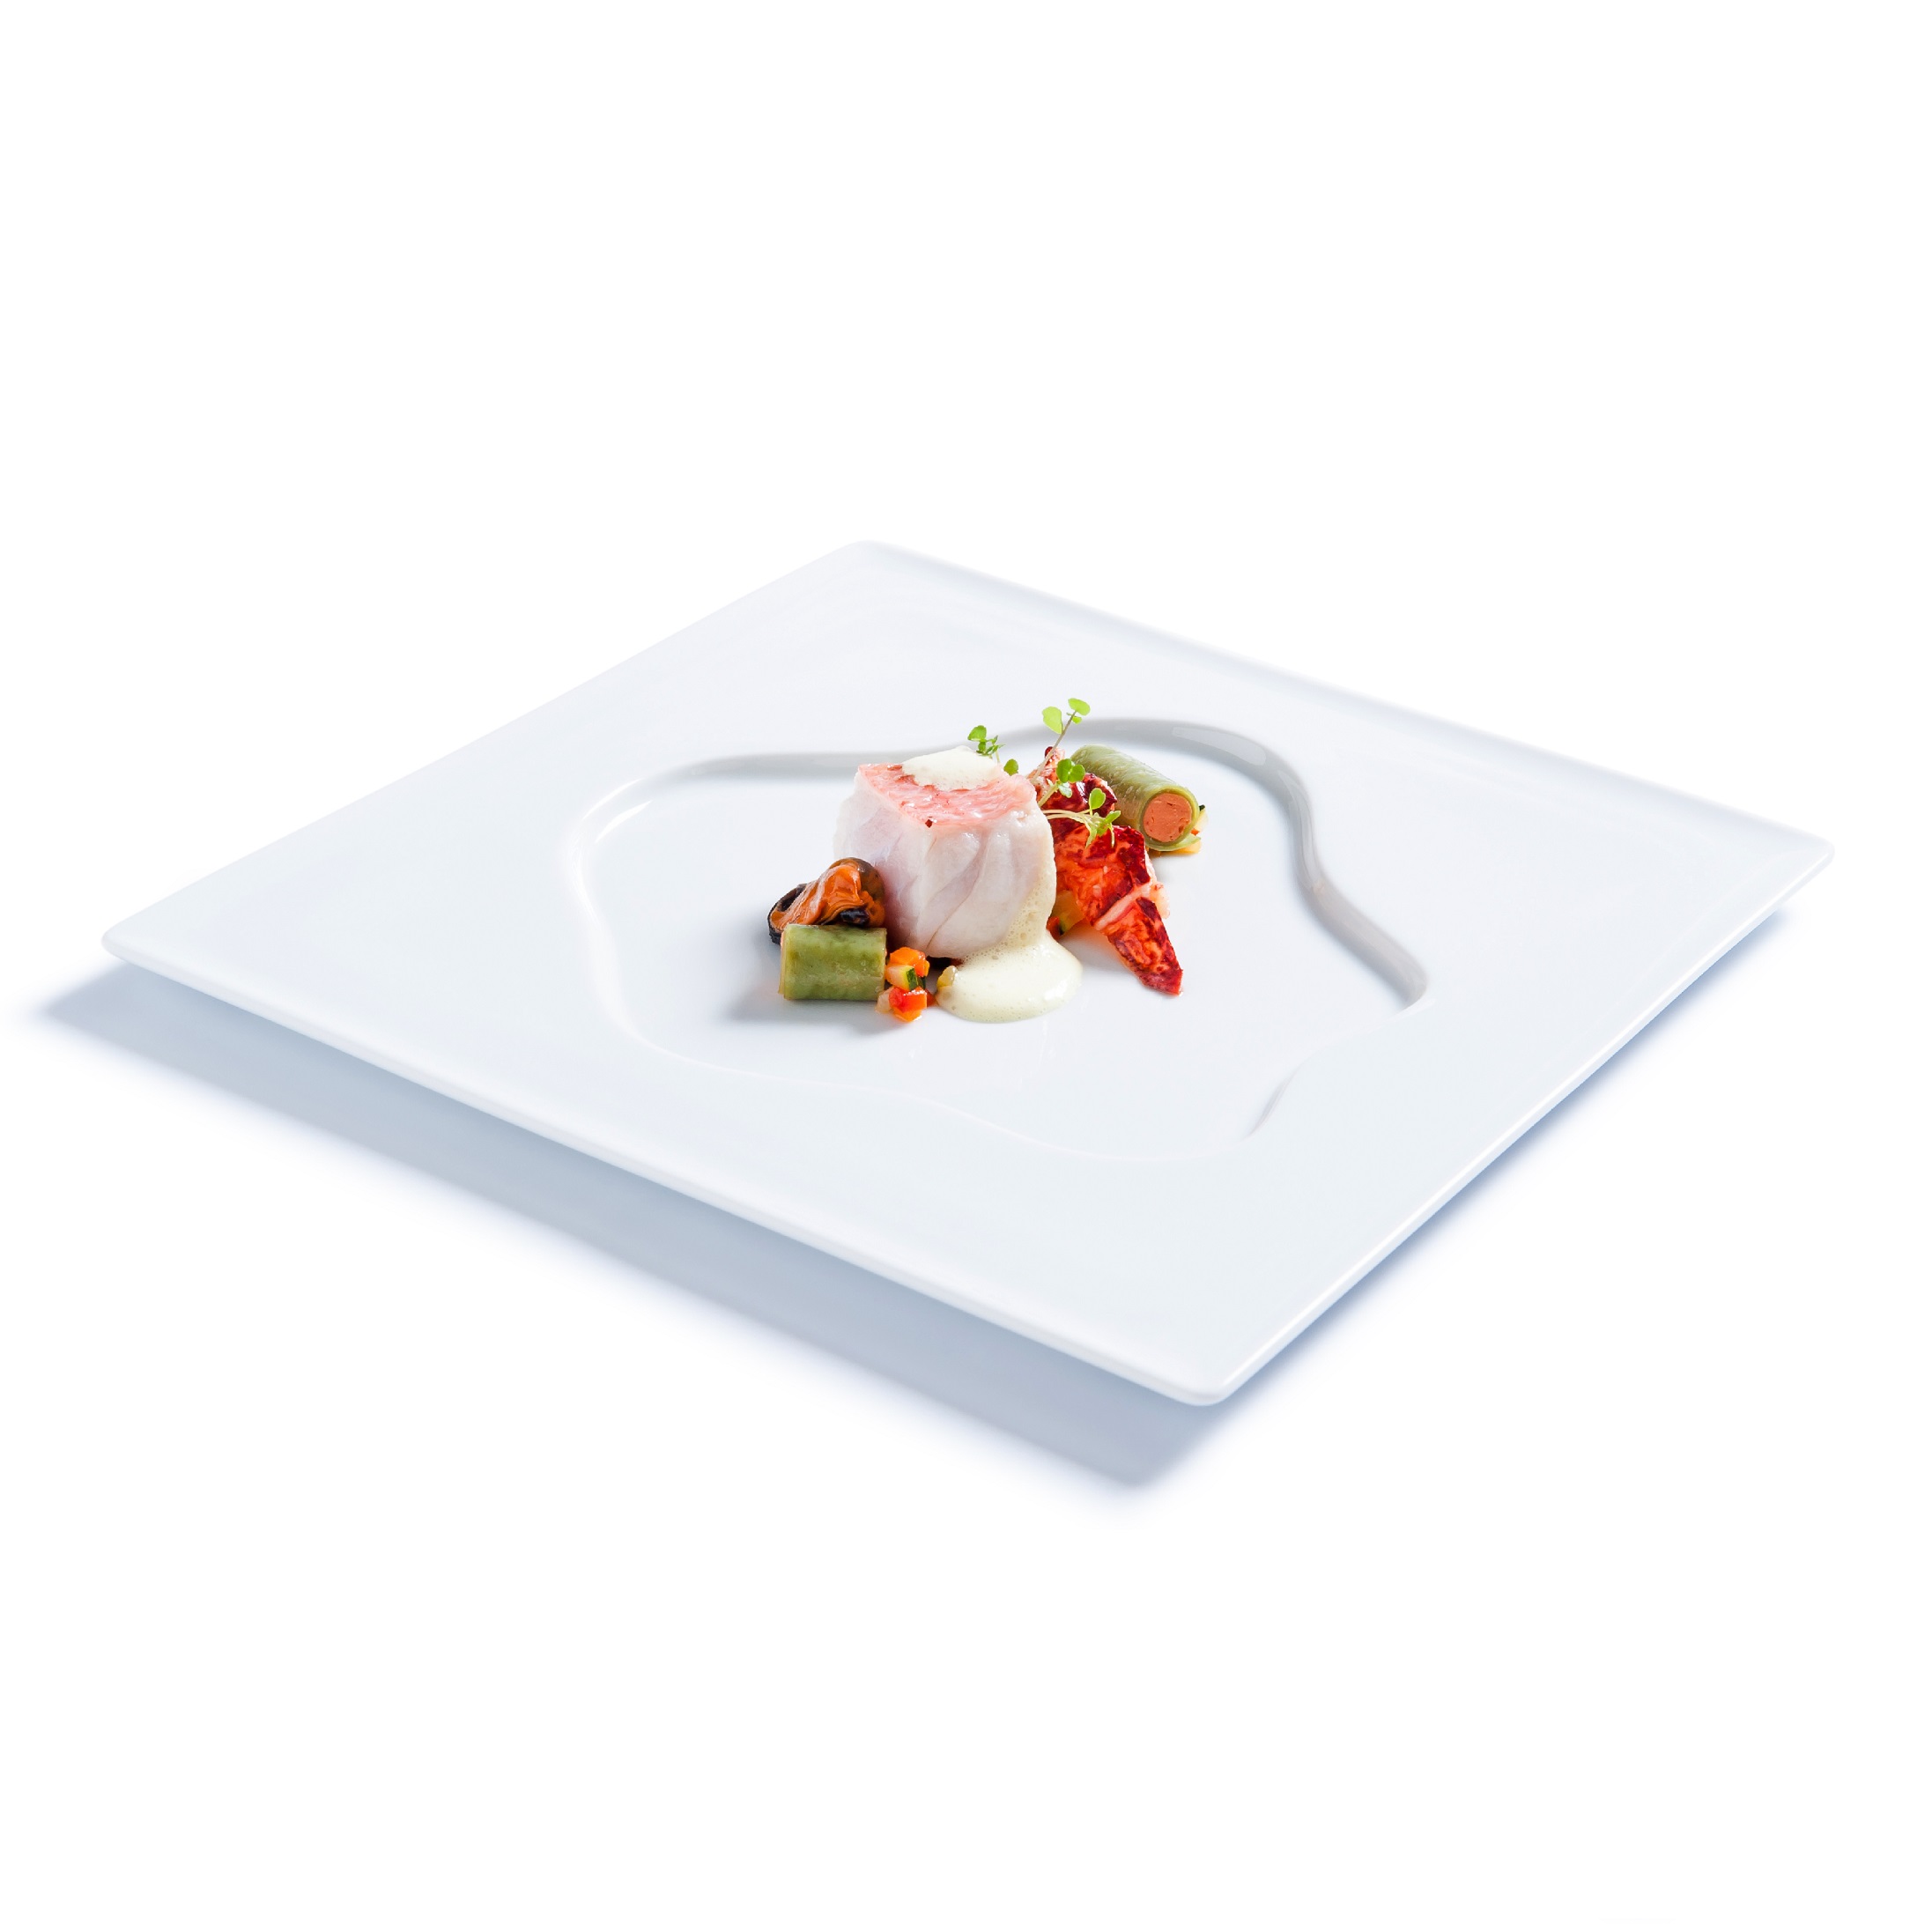 lake-vista-alegre-chefs-collection-denis-perevoz-newformsdesign